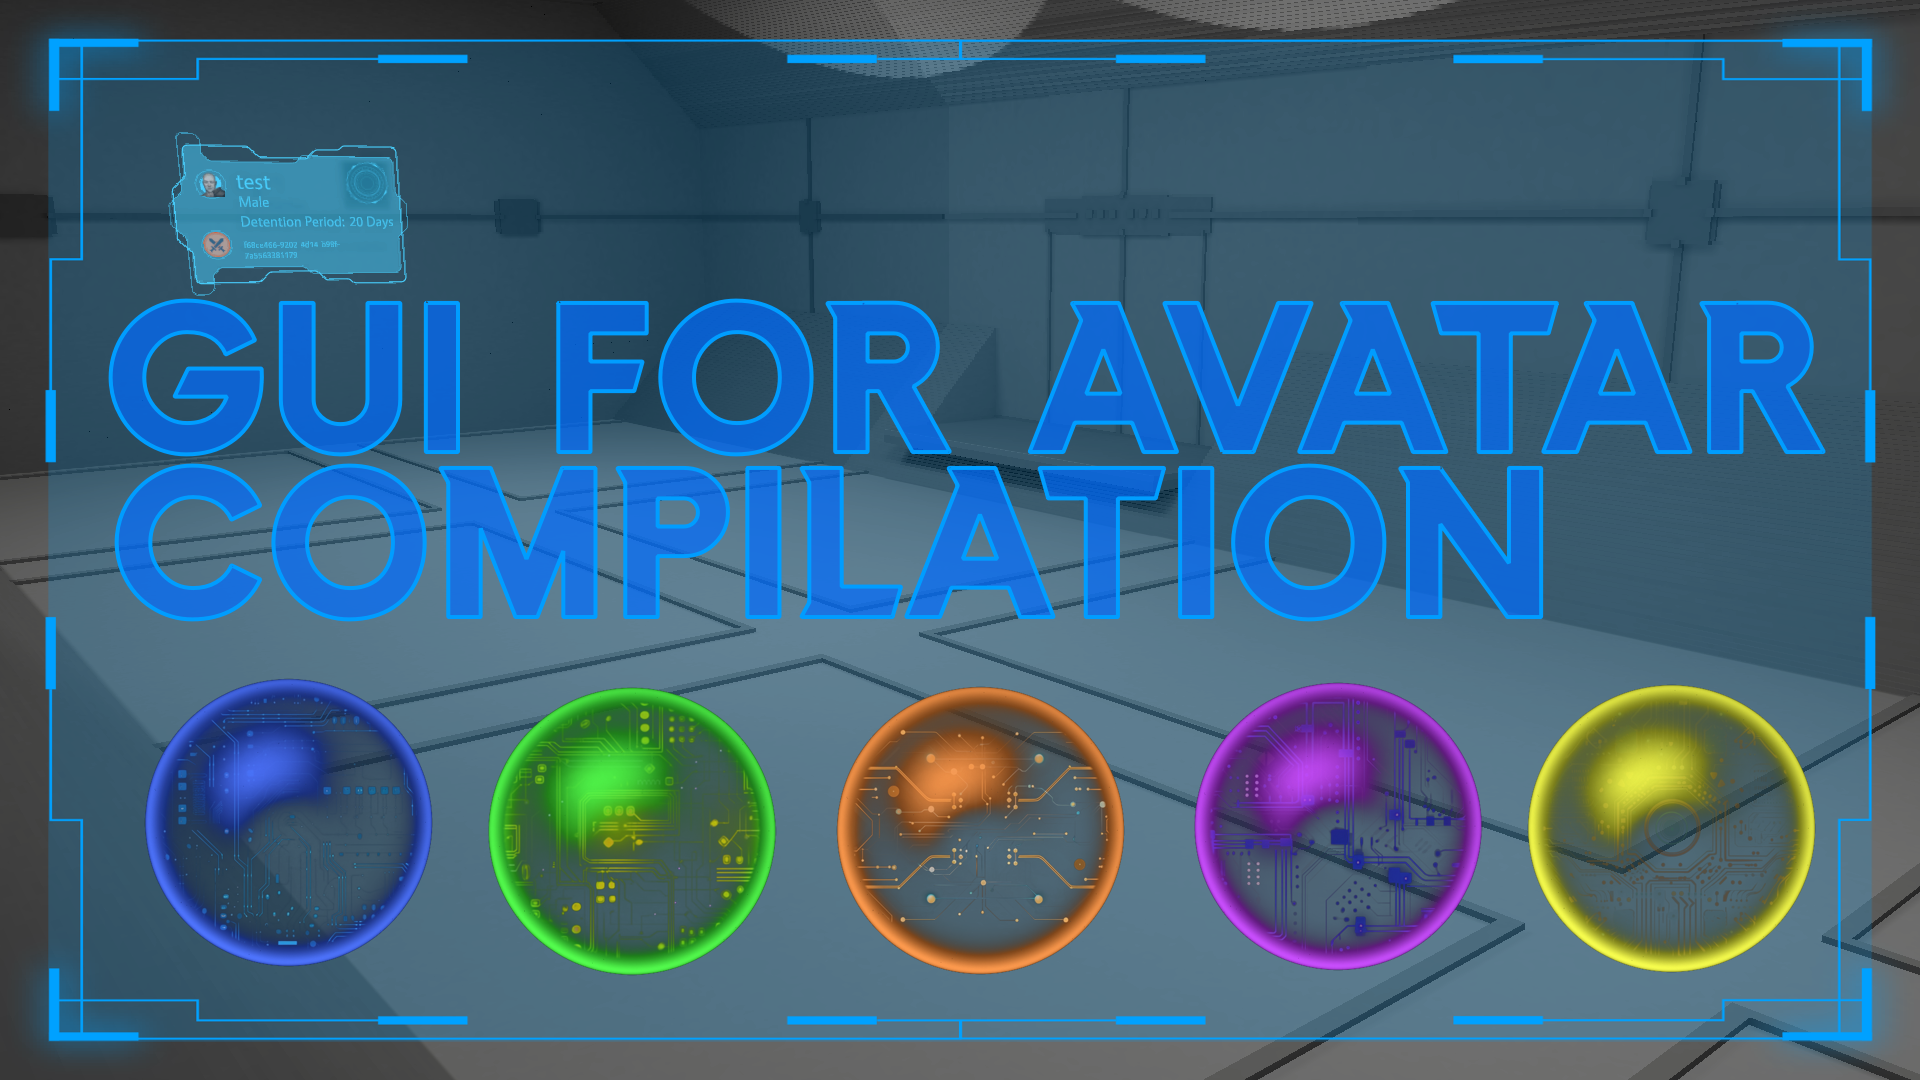 Avatar Compilation GUI